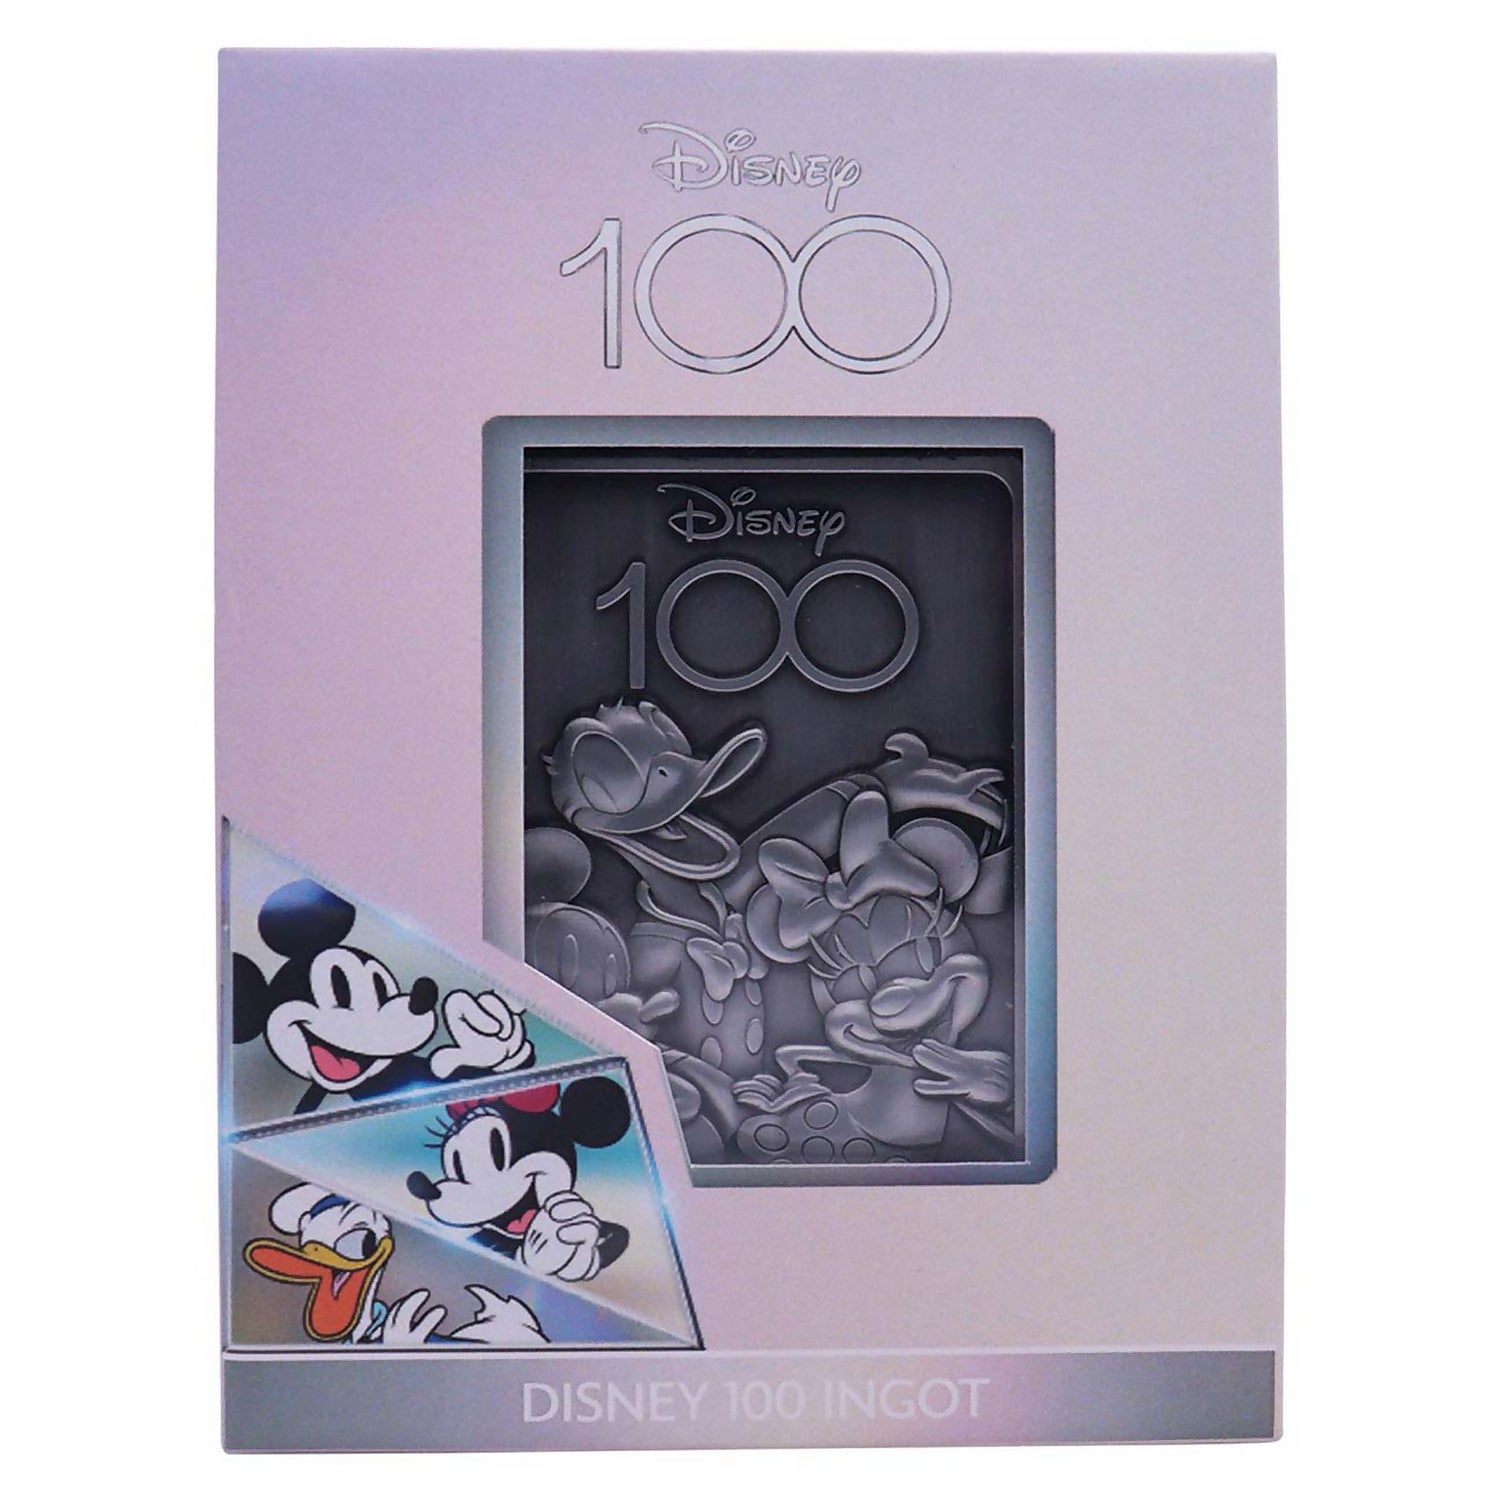 Disney 100th anniverary limited edition ingot by Fanattik